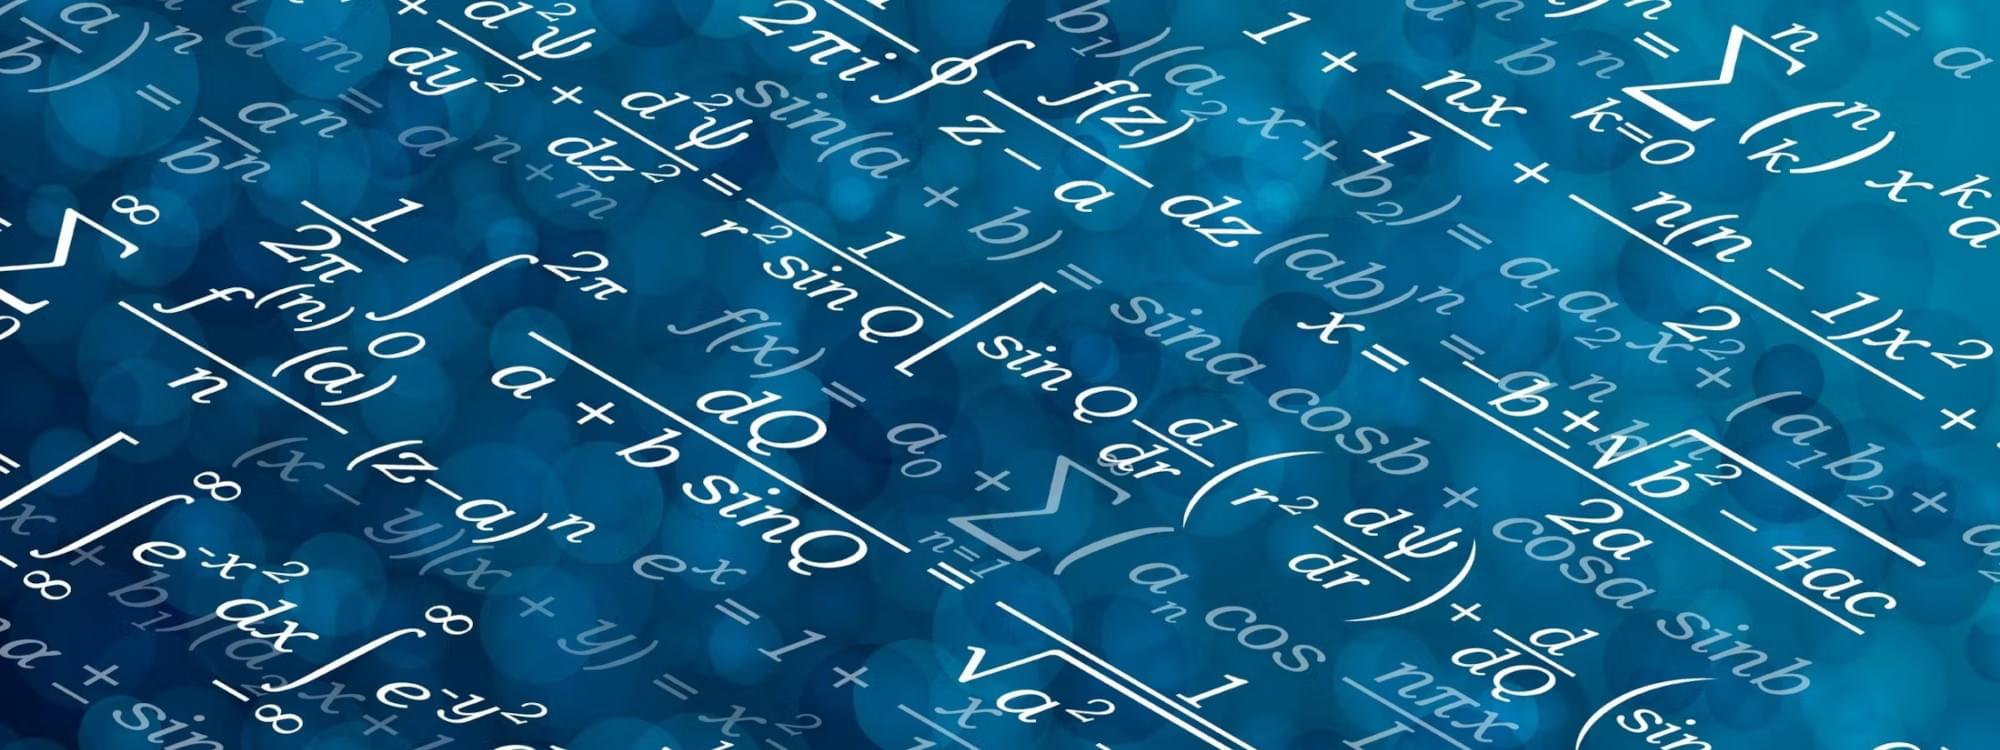 An image of various math equations